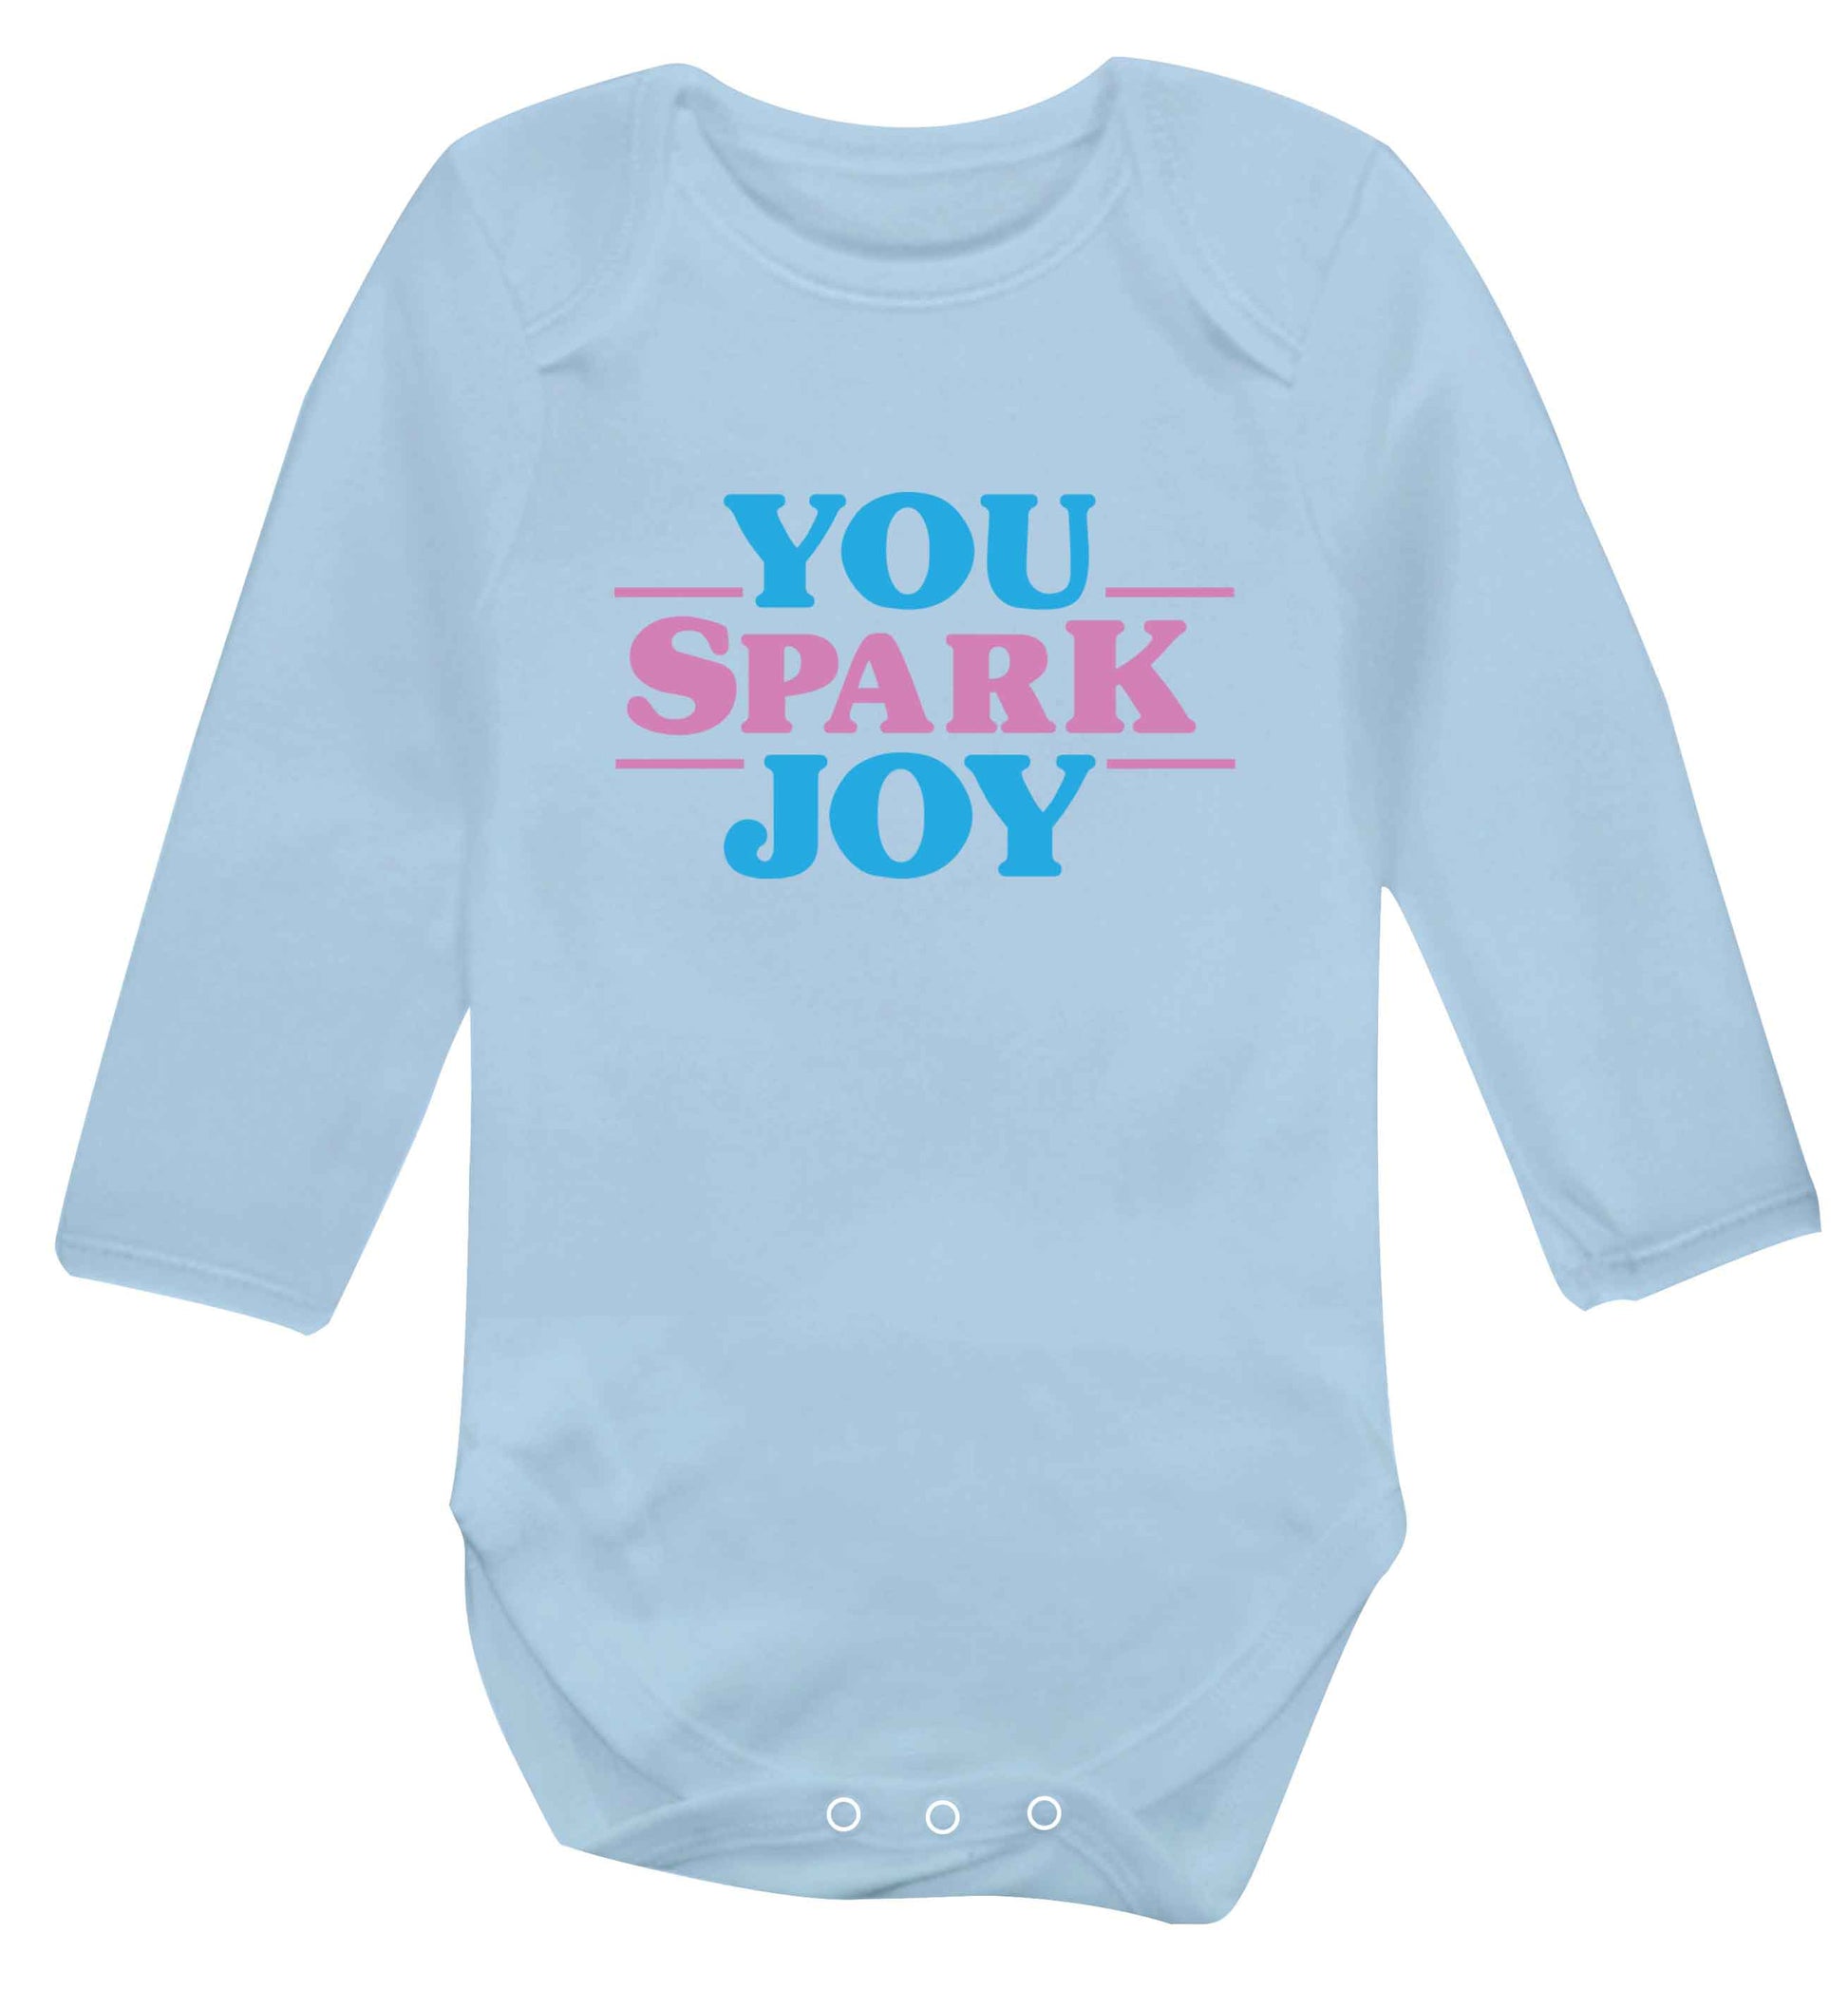 You spark joy baby vest long sleeved pale blue 6-12 months